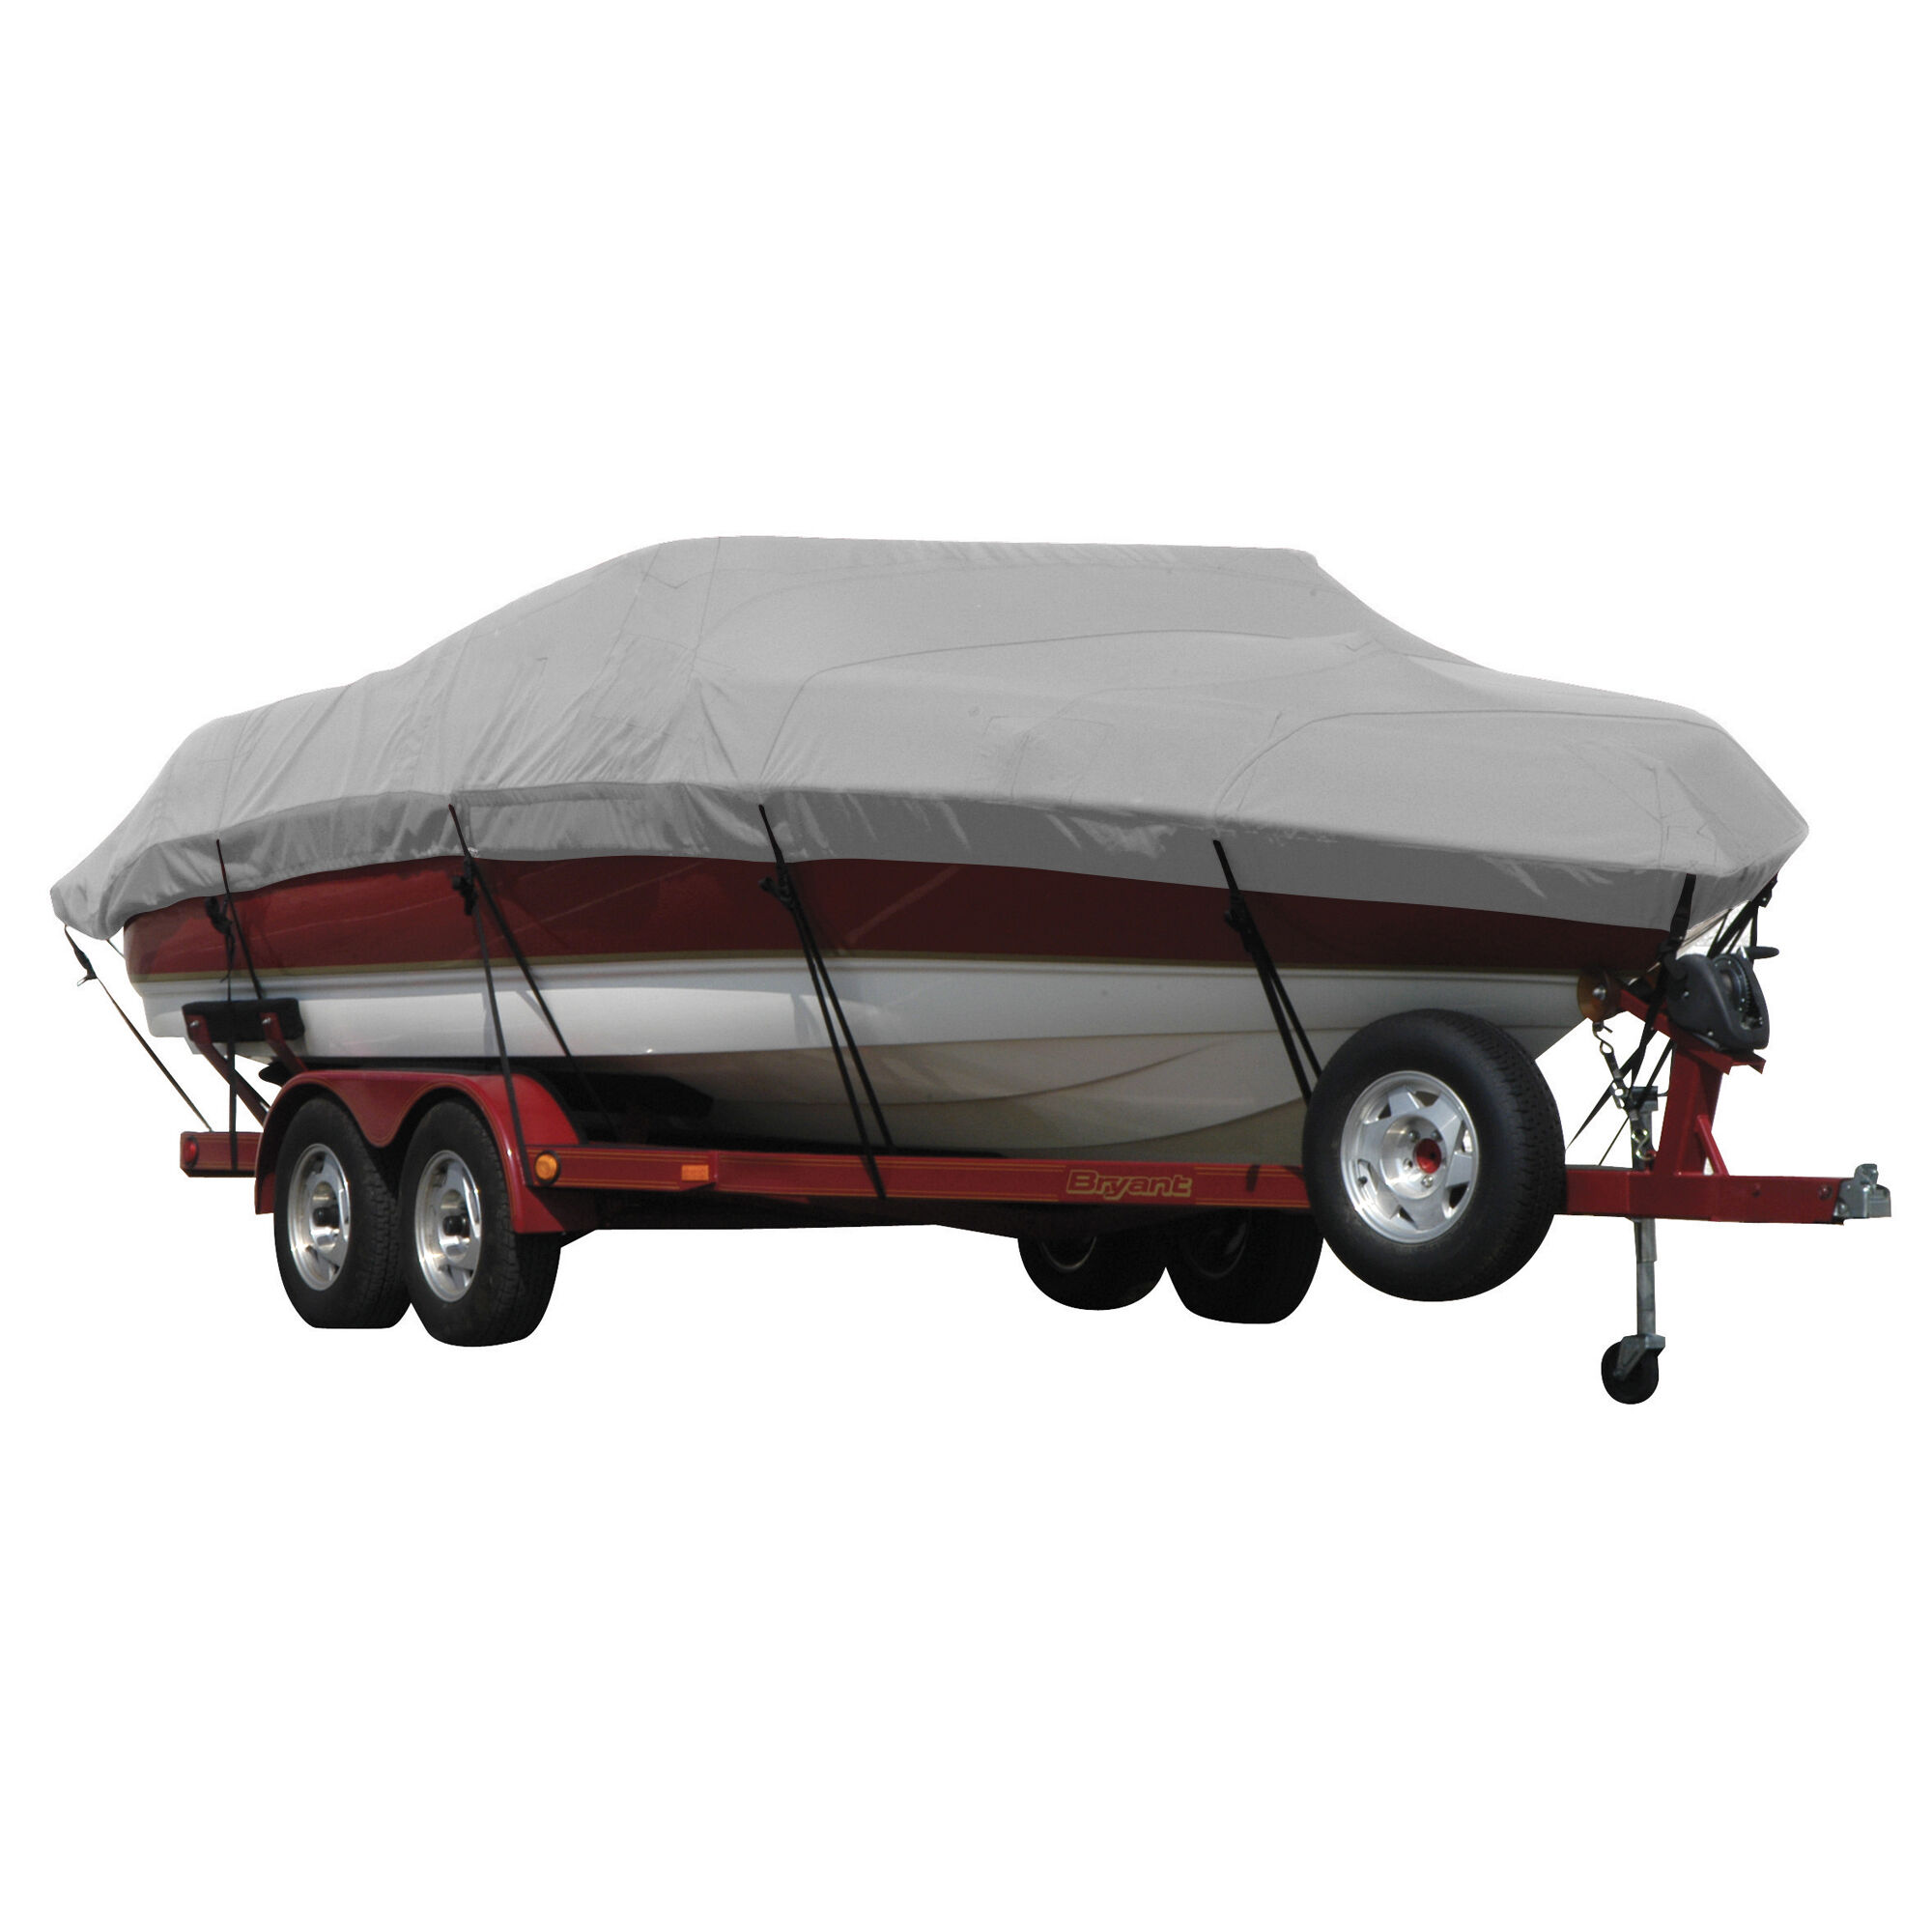 Covermate Exact Fit Sunbrella Boat Cover for Seaswirl Striper 2150 Striper 2150 Walkaround Hard Top O/B. Grey